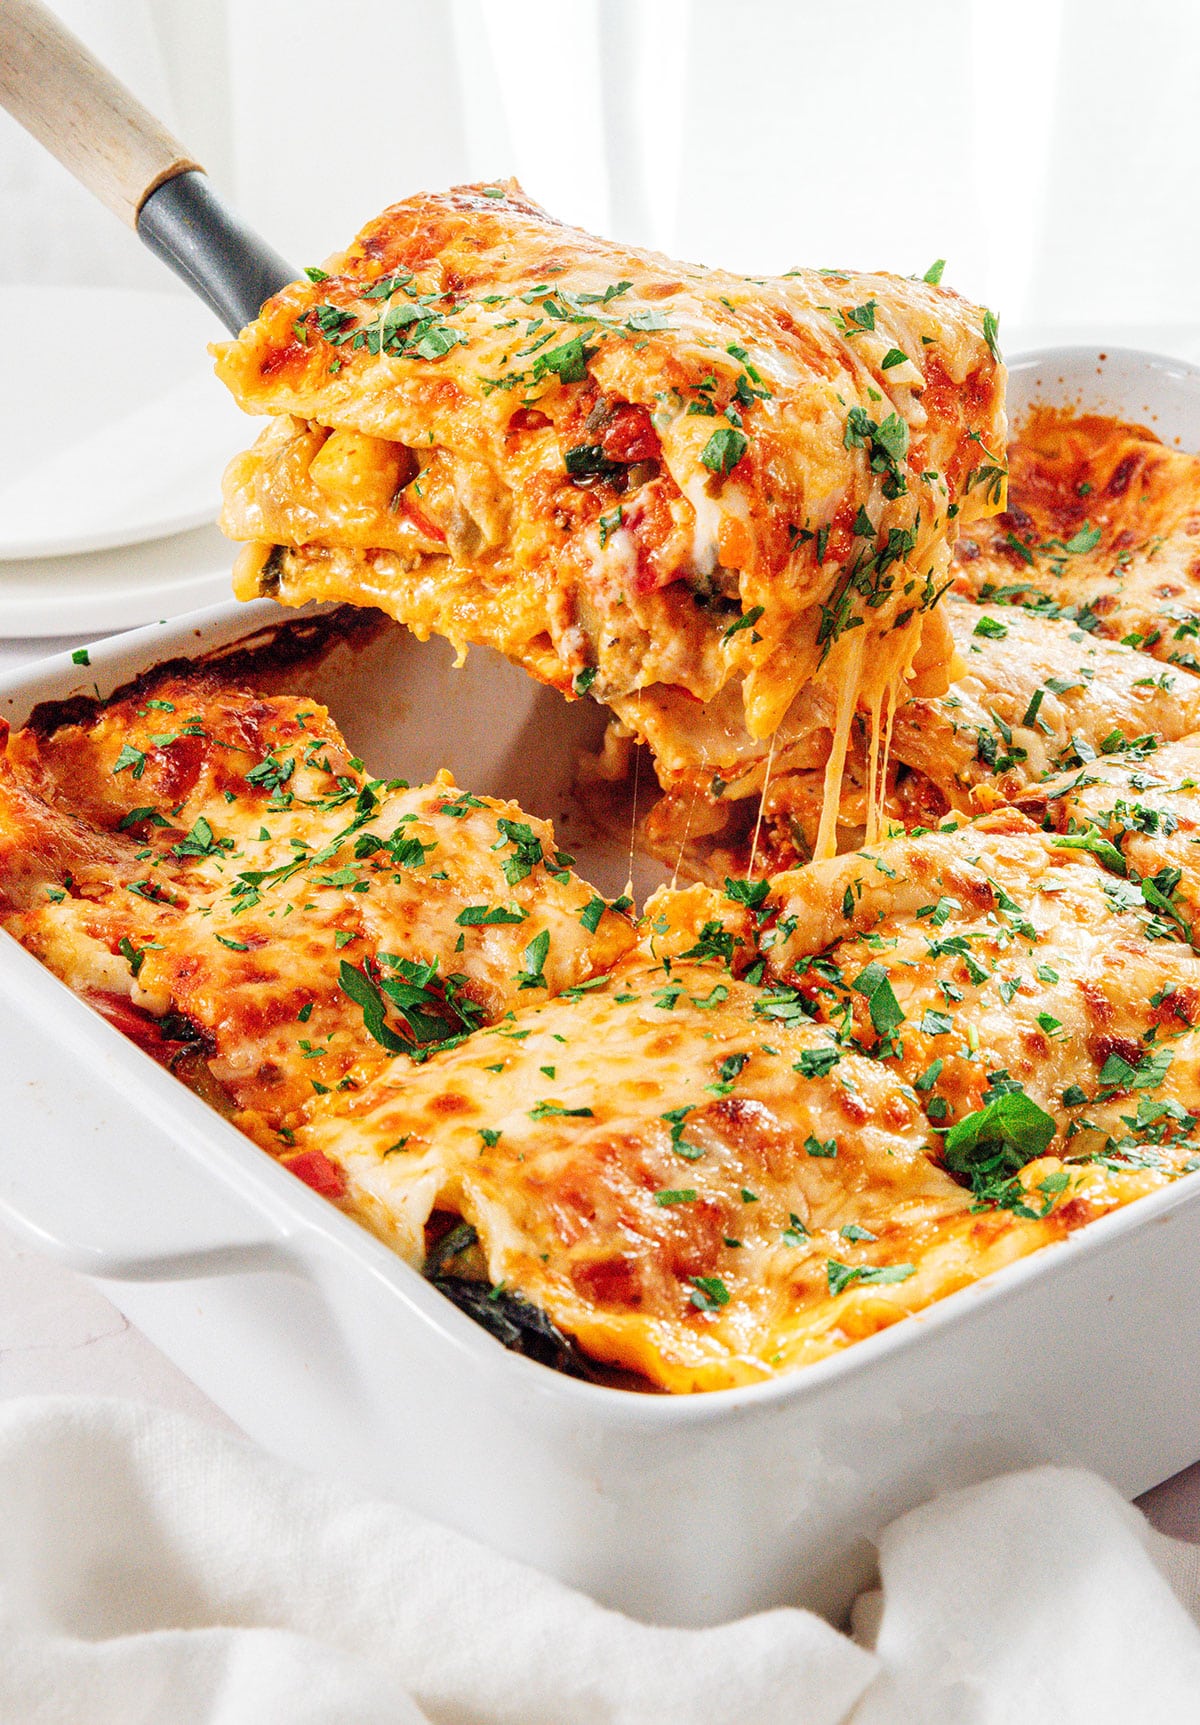 Vegetable lasagna in a casserole dish.